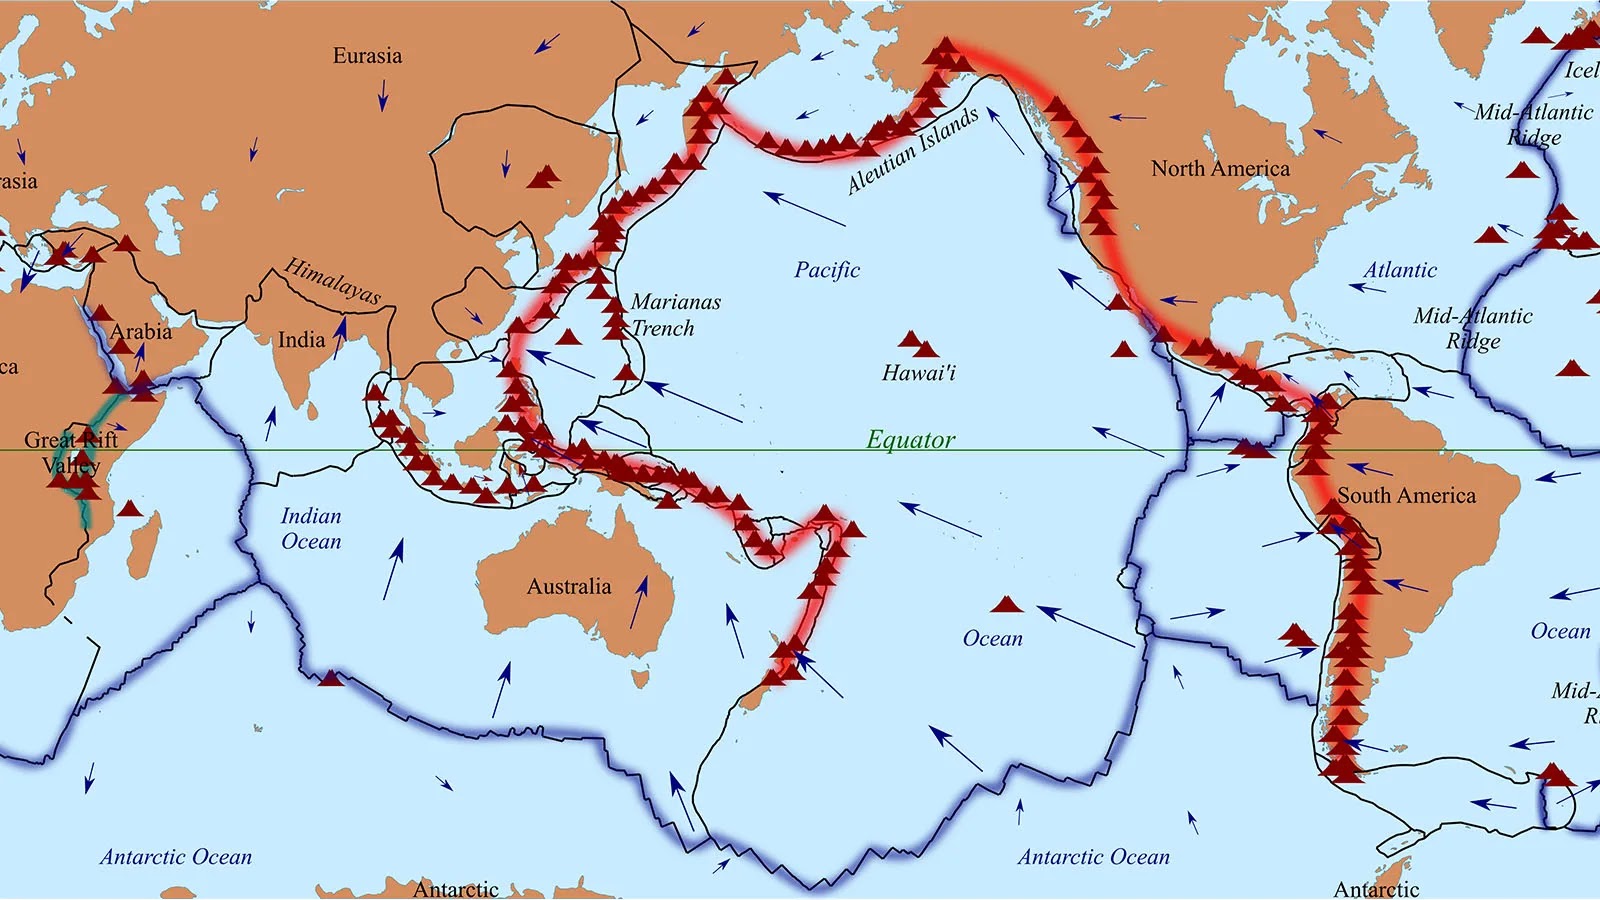 Tsunami - by David Redfern - A Level of Geography